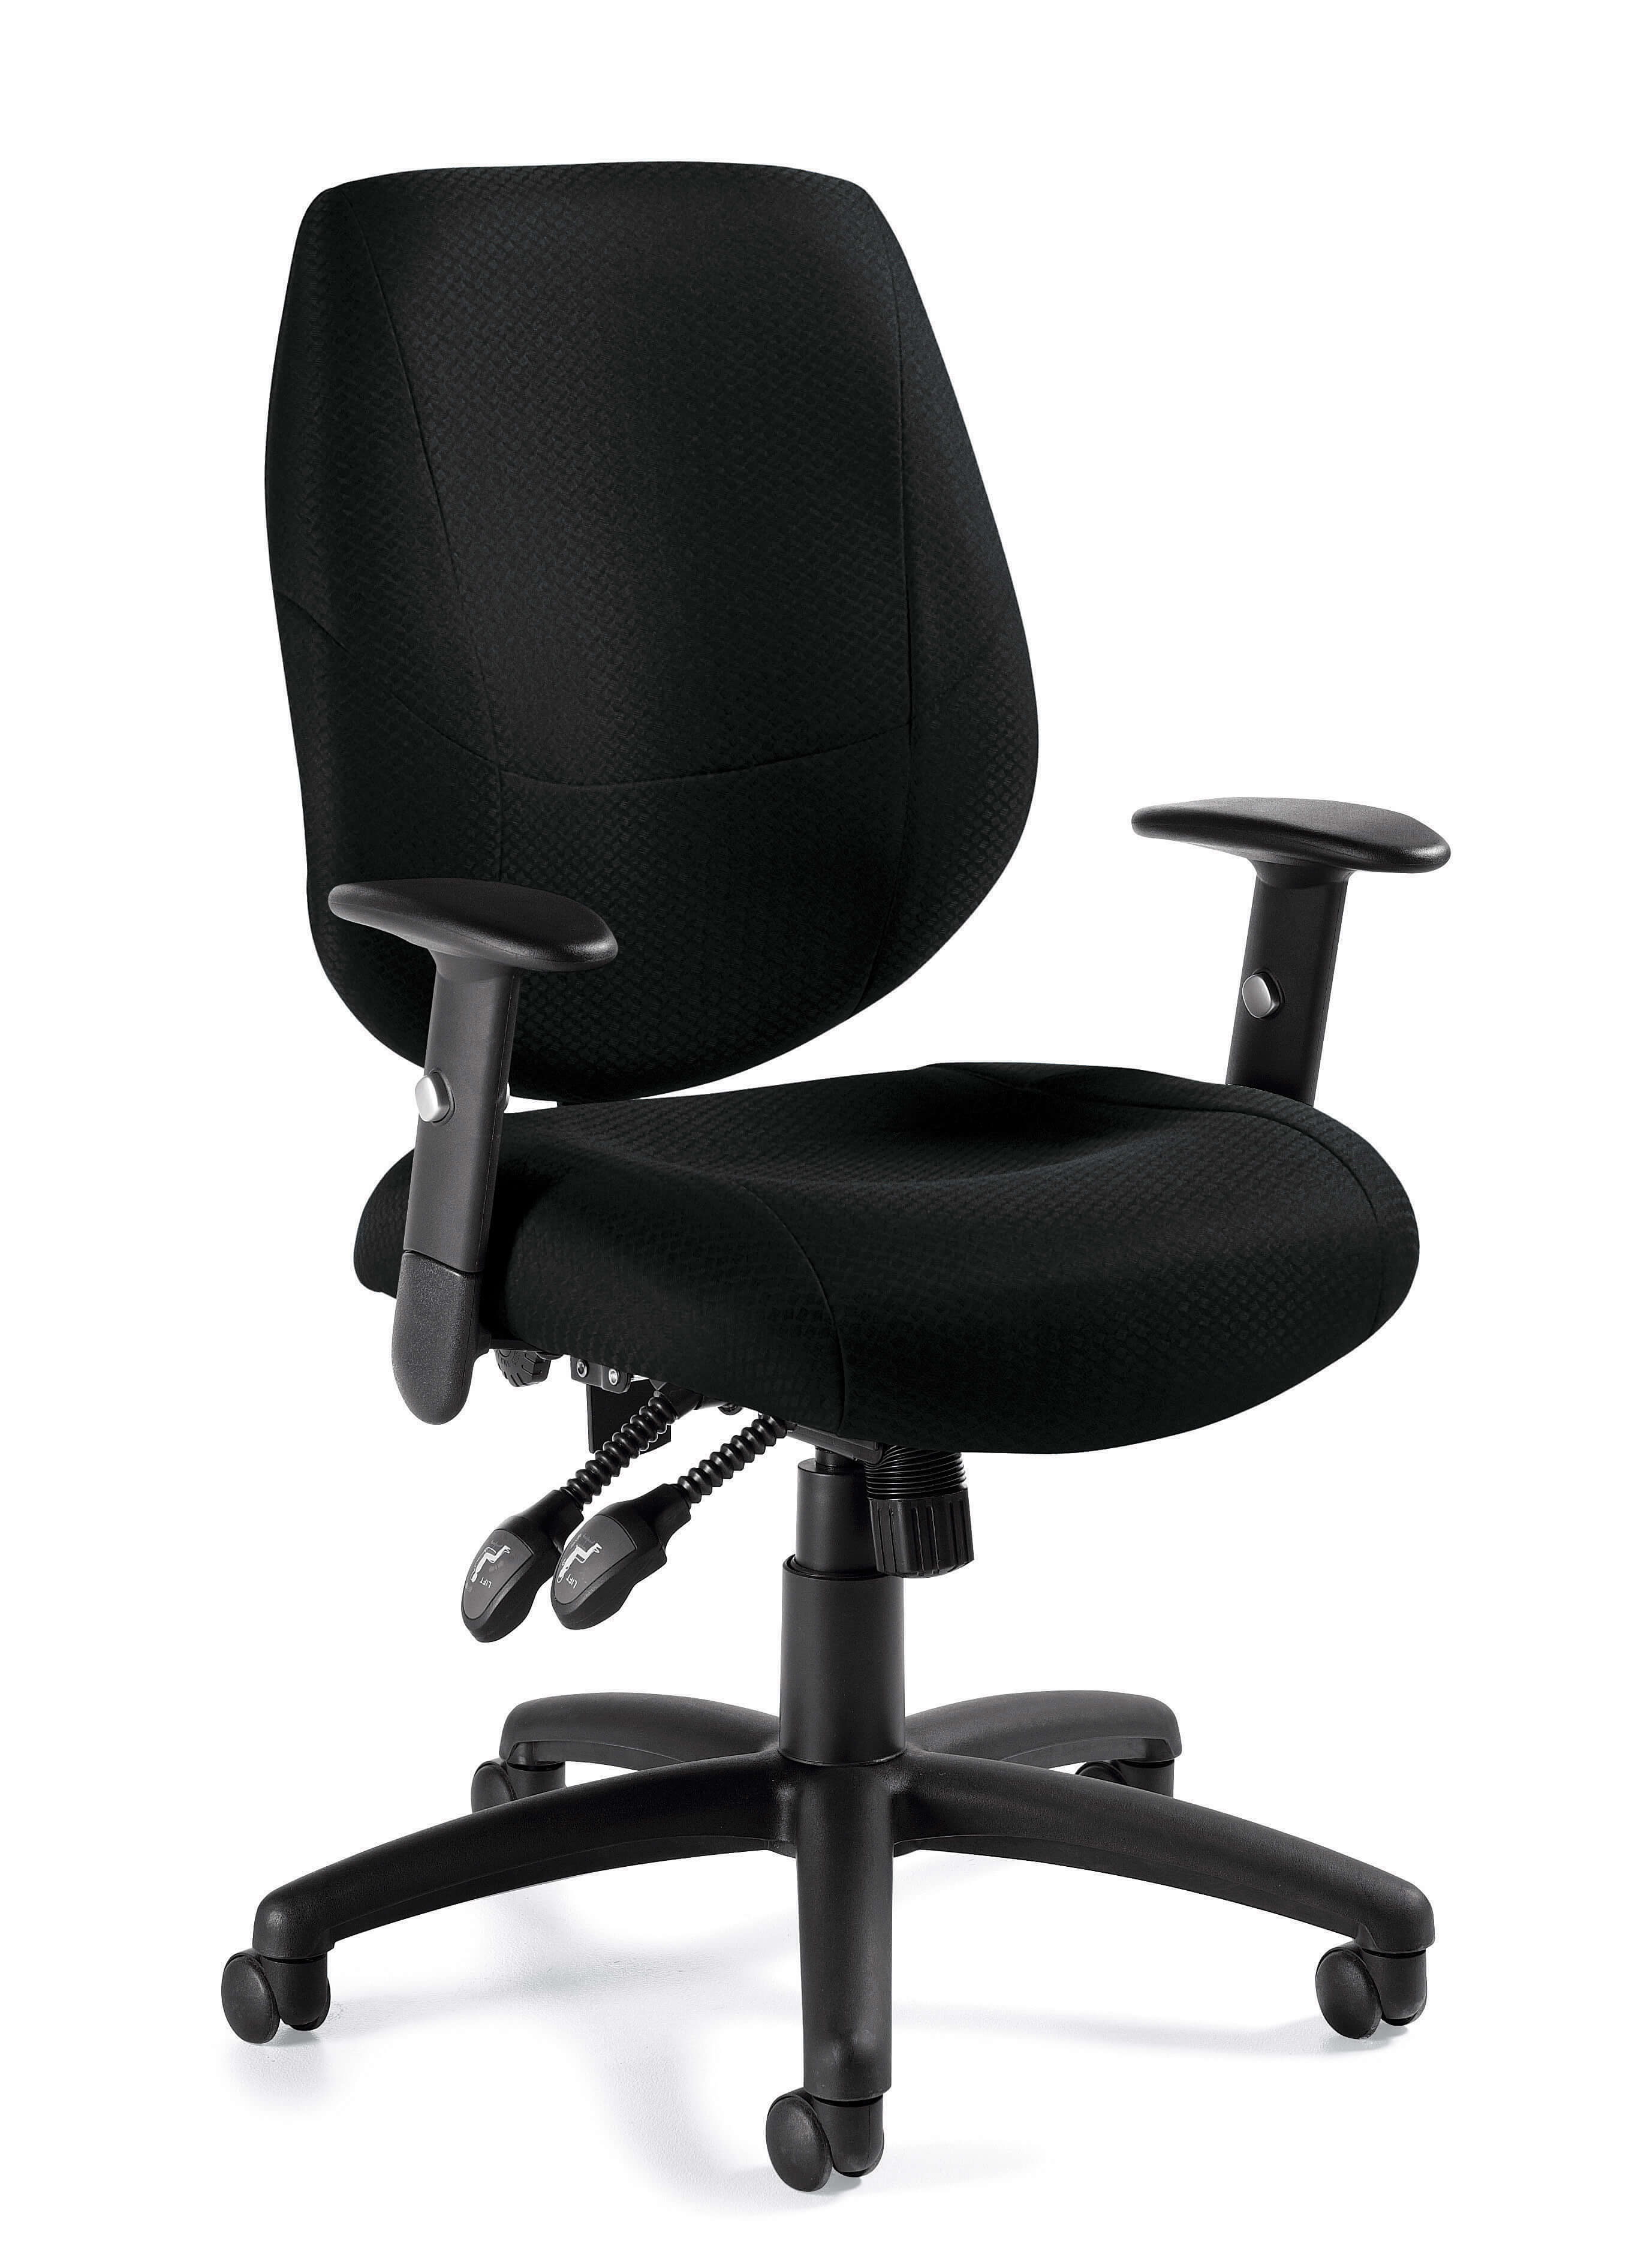 office-furniture-chairs-ergonomic-task-chair.jpg